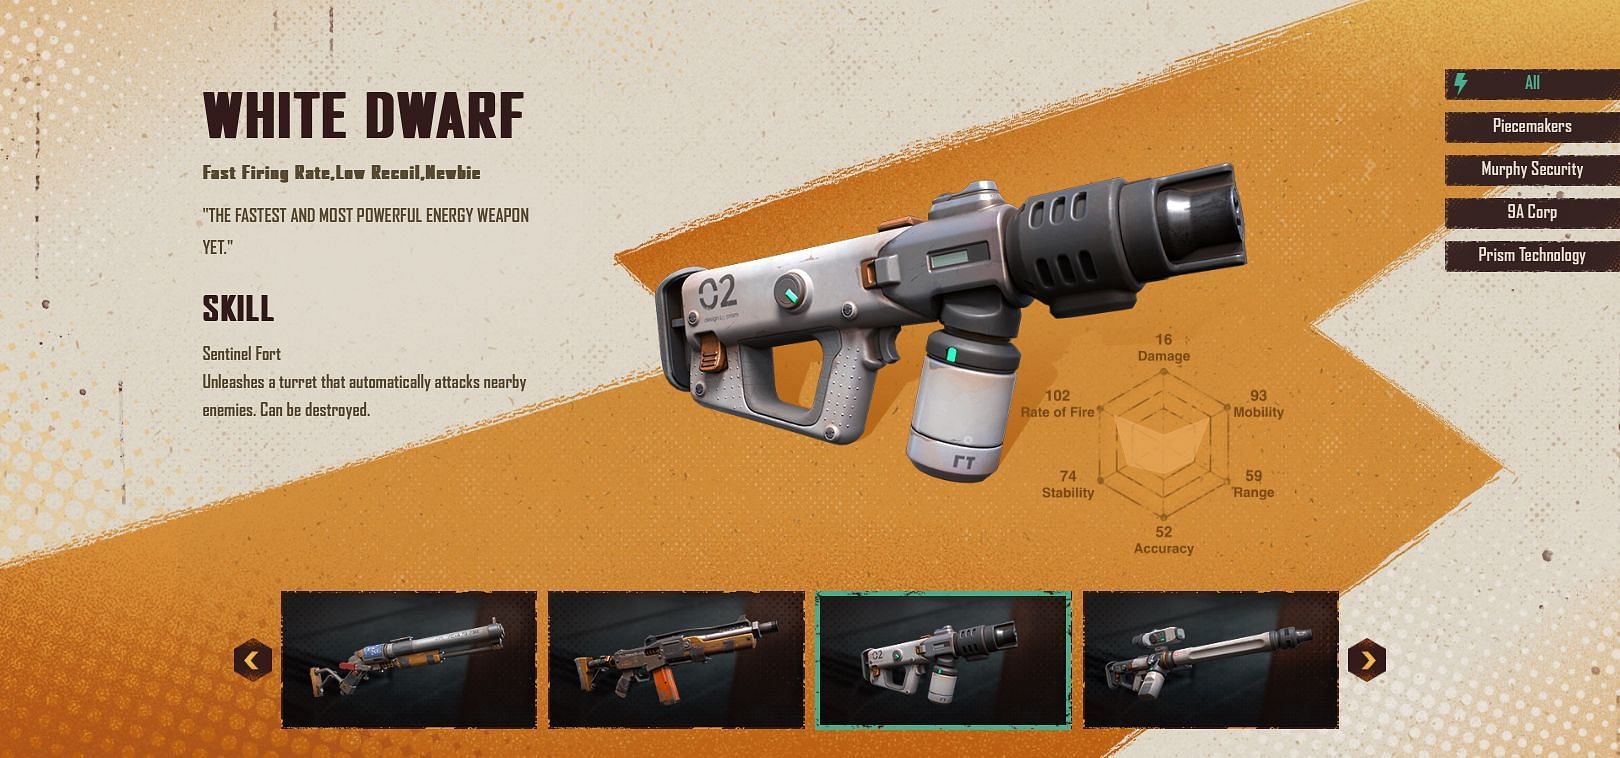 White Dwarf gun (Image via Farlight 84 official website)